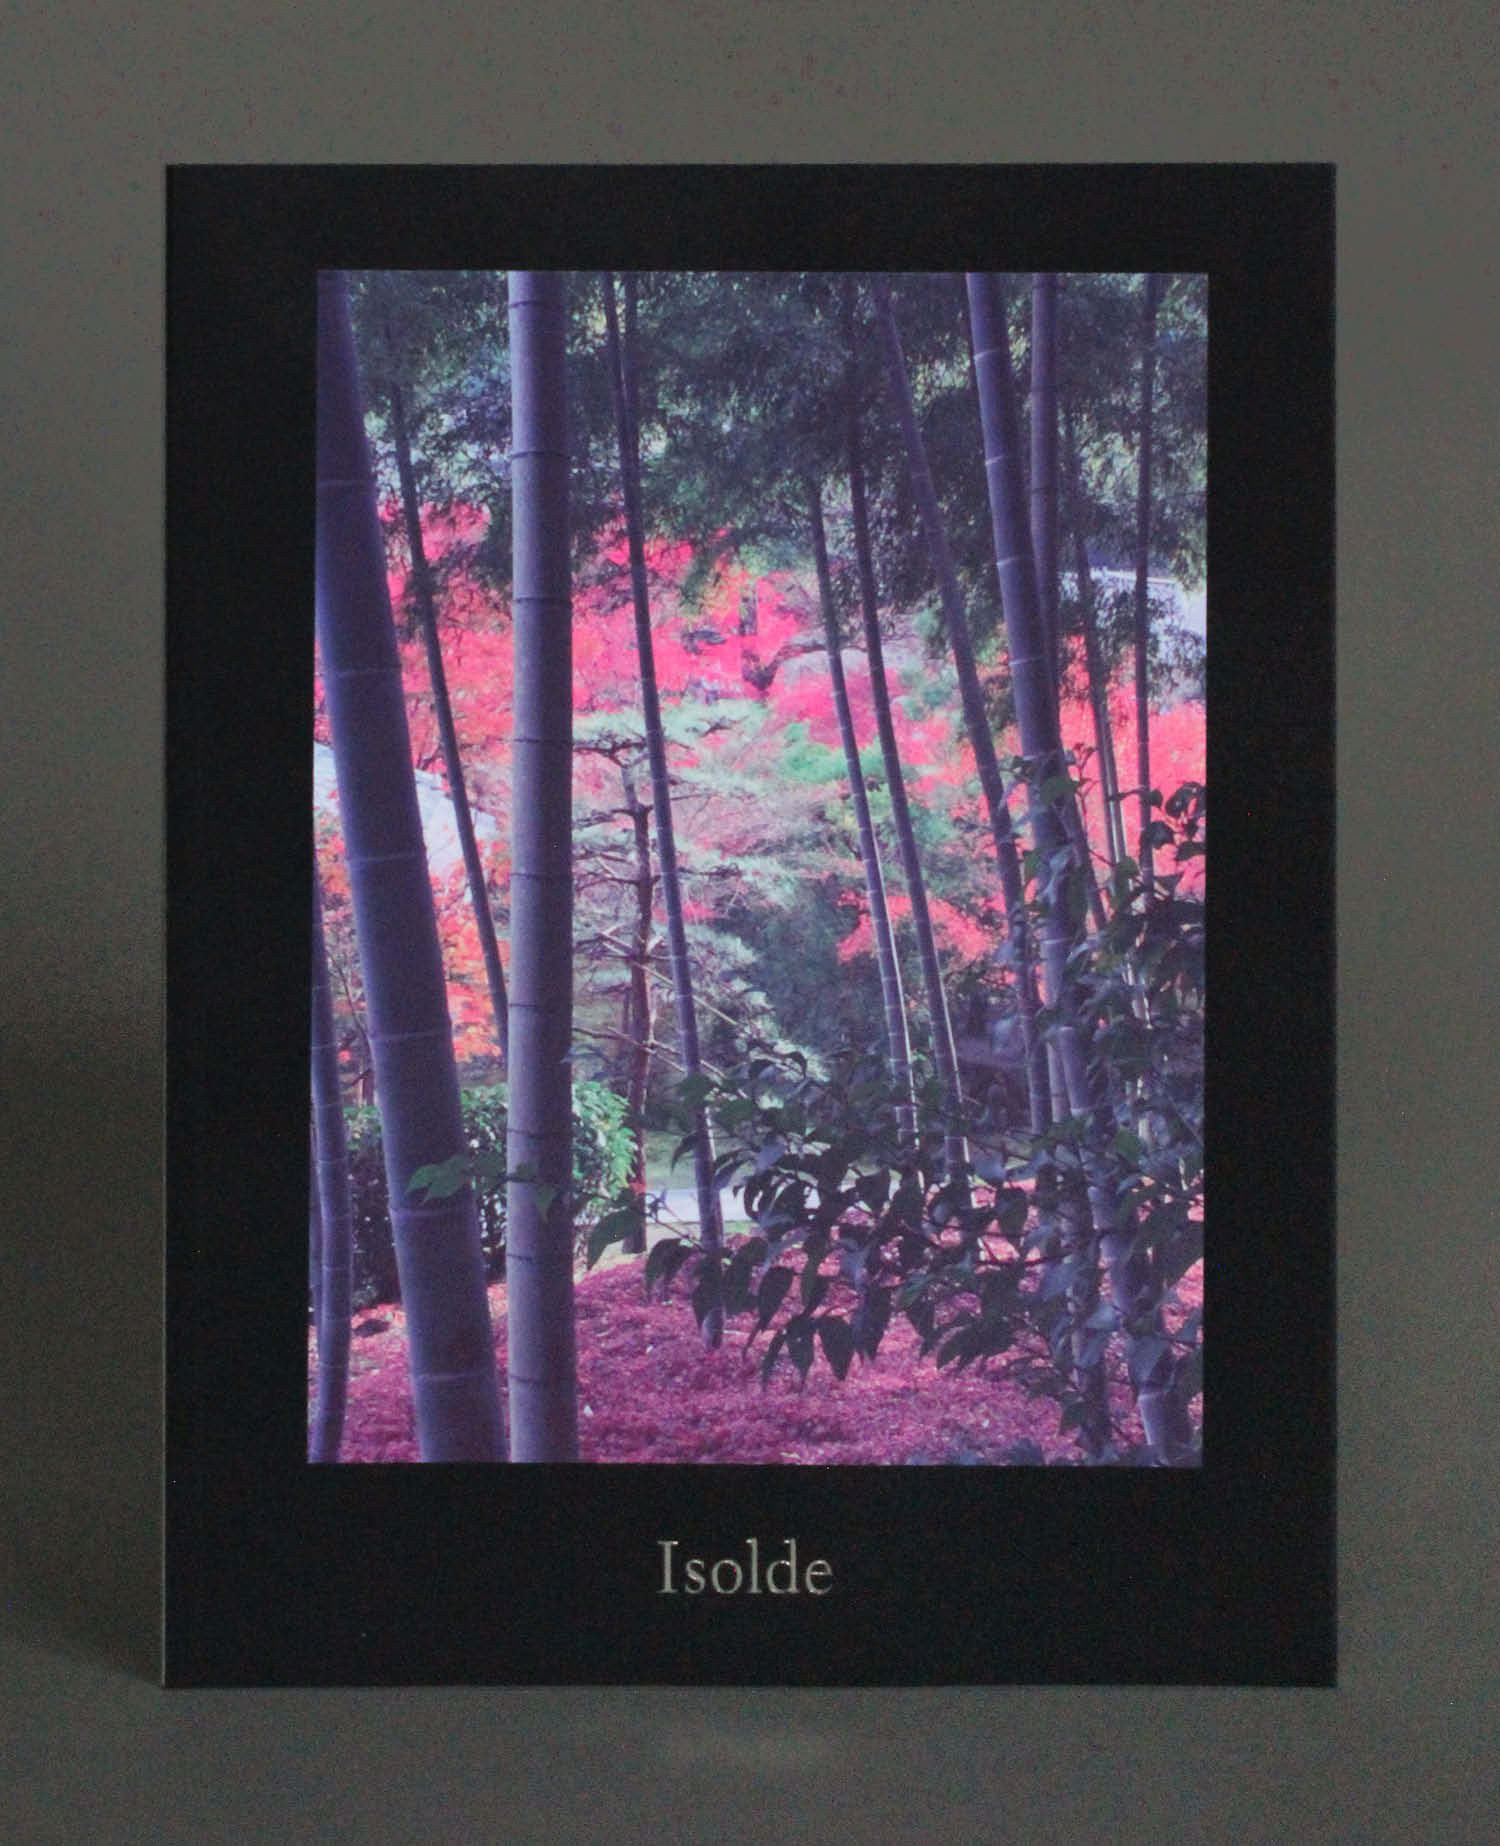 Elizabeth Peyton, Isolde exhibition catalogue for Sadie Coles HQ